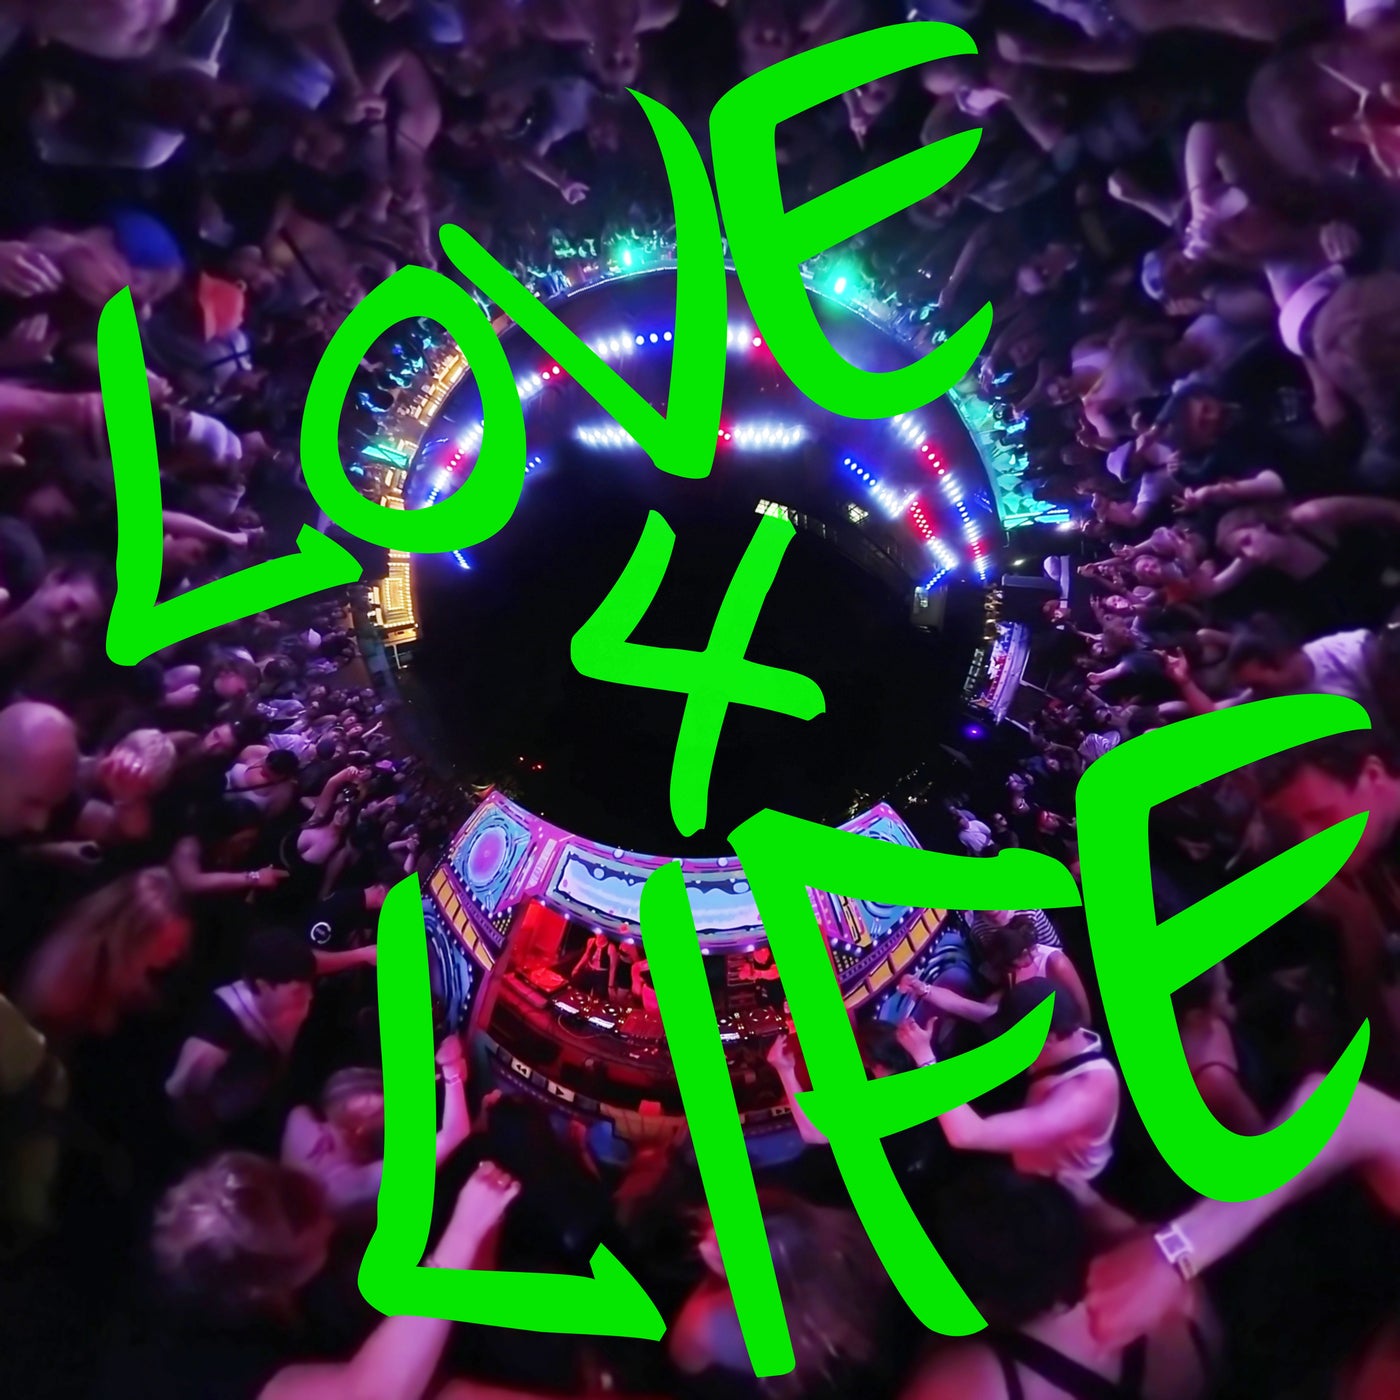 LOVE 4 LIFE